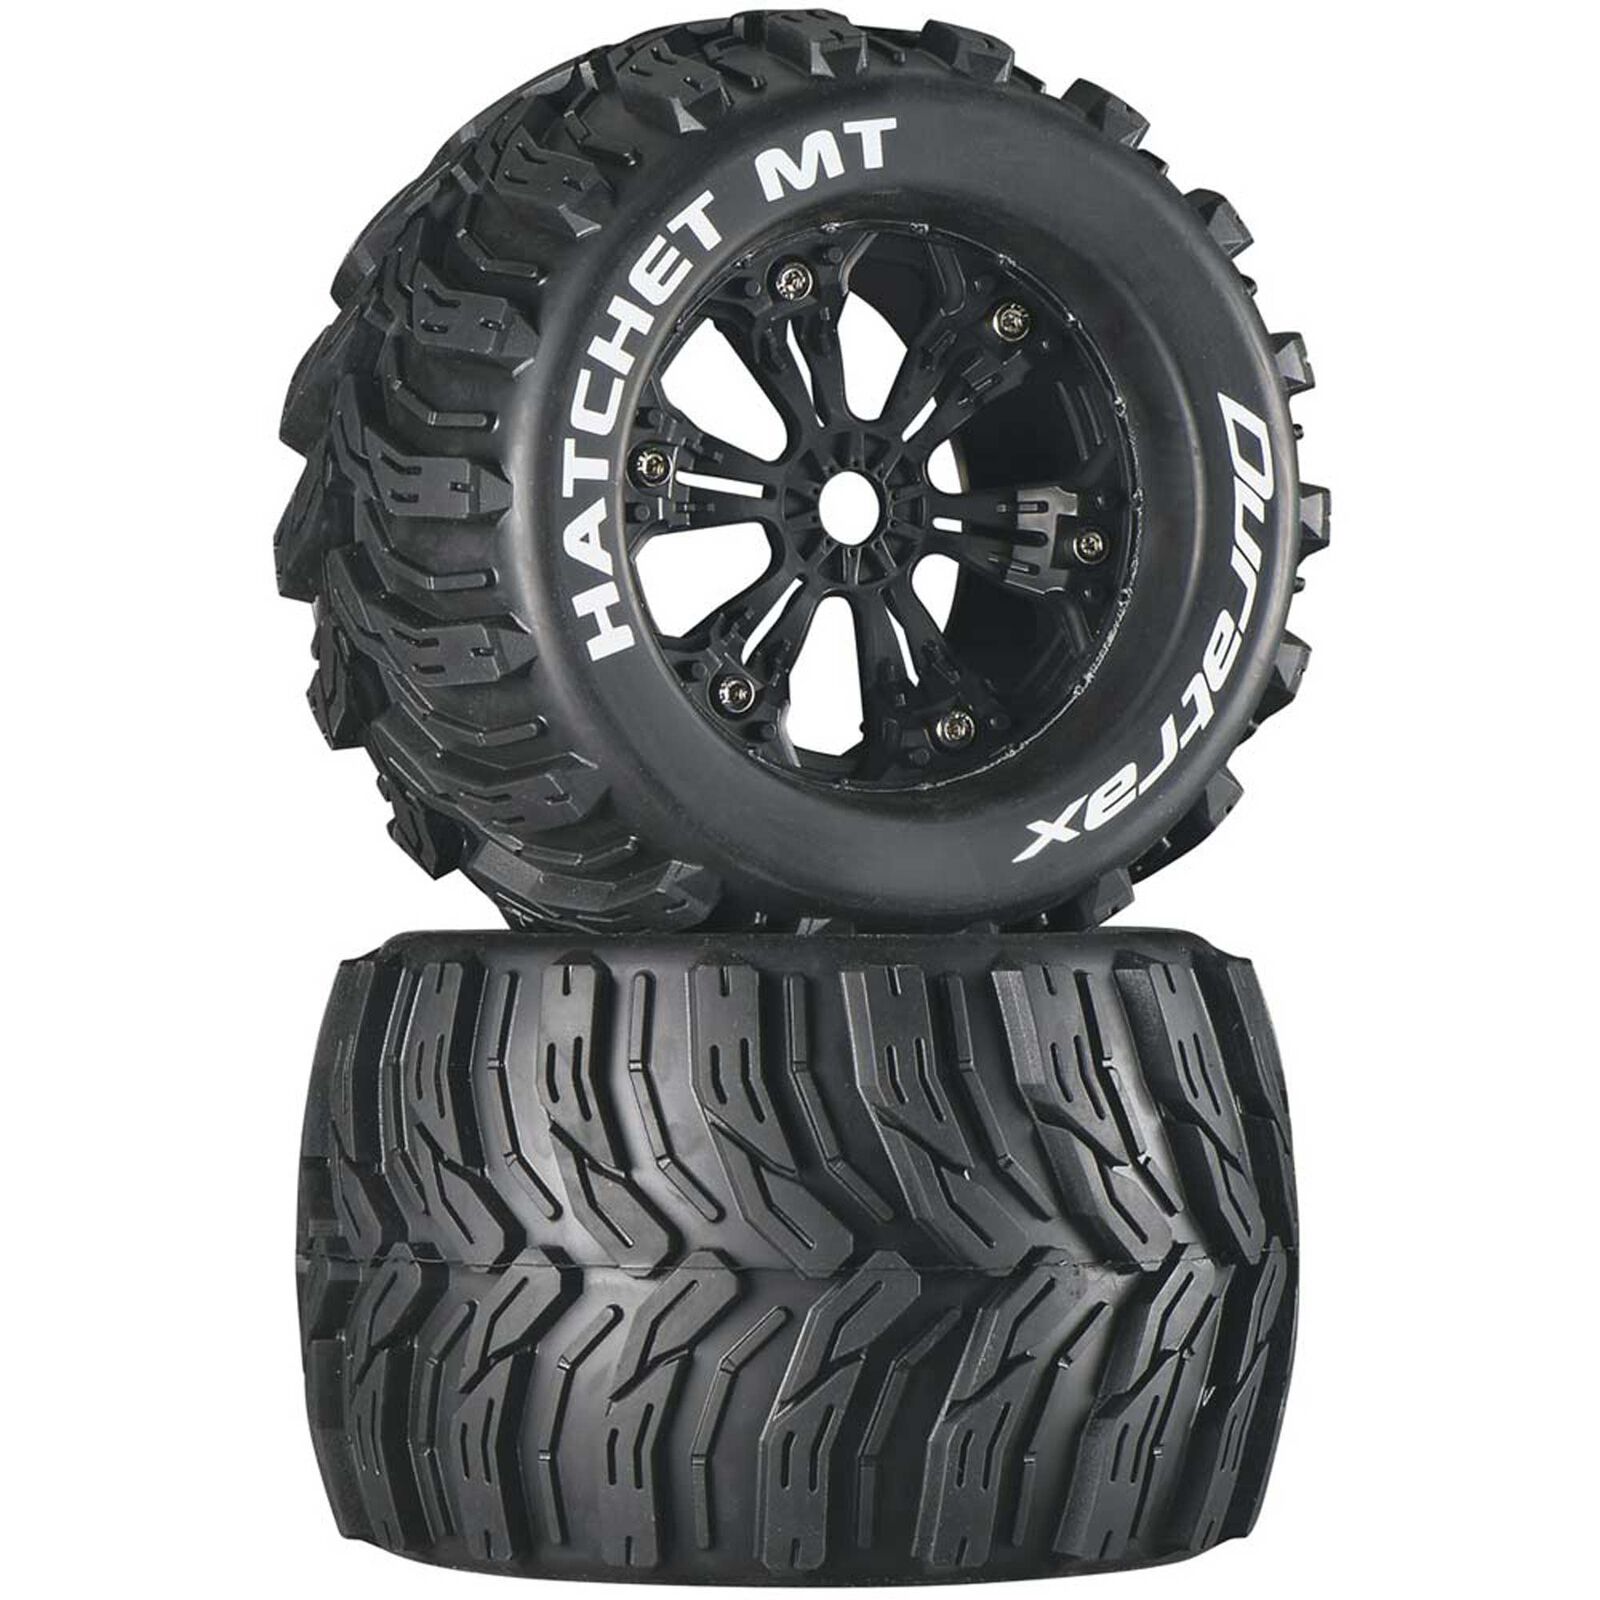 Hatchet MT 3.8" Mounted Tires, Black (2)